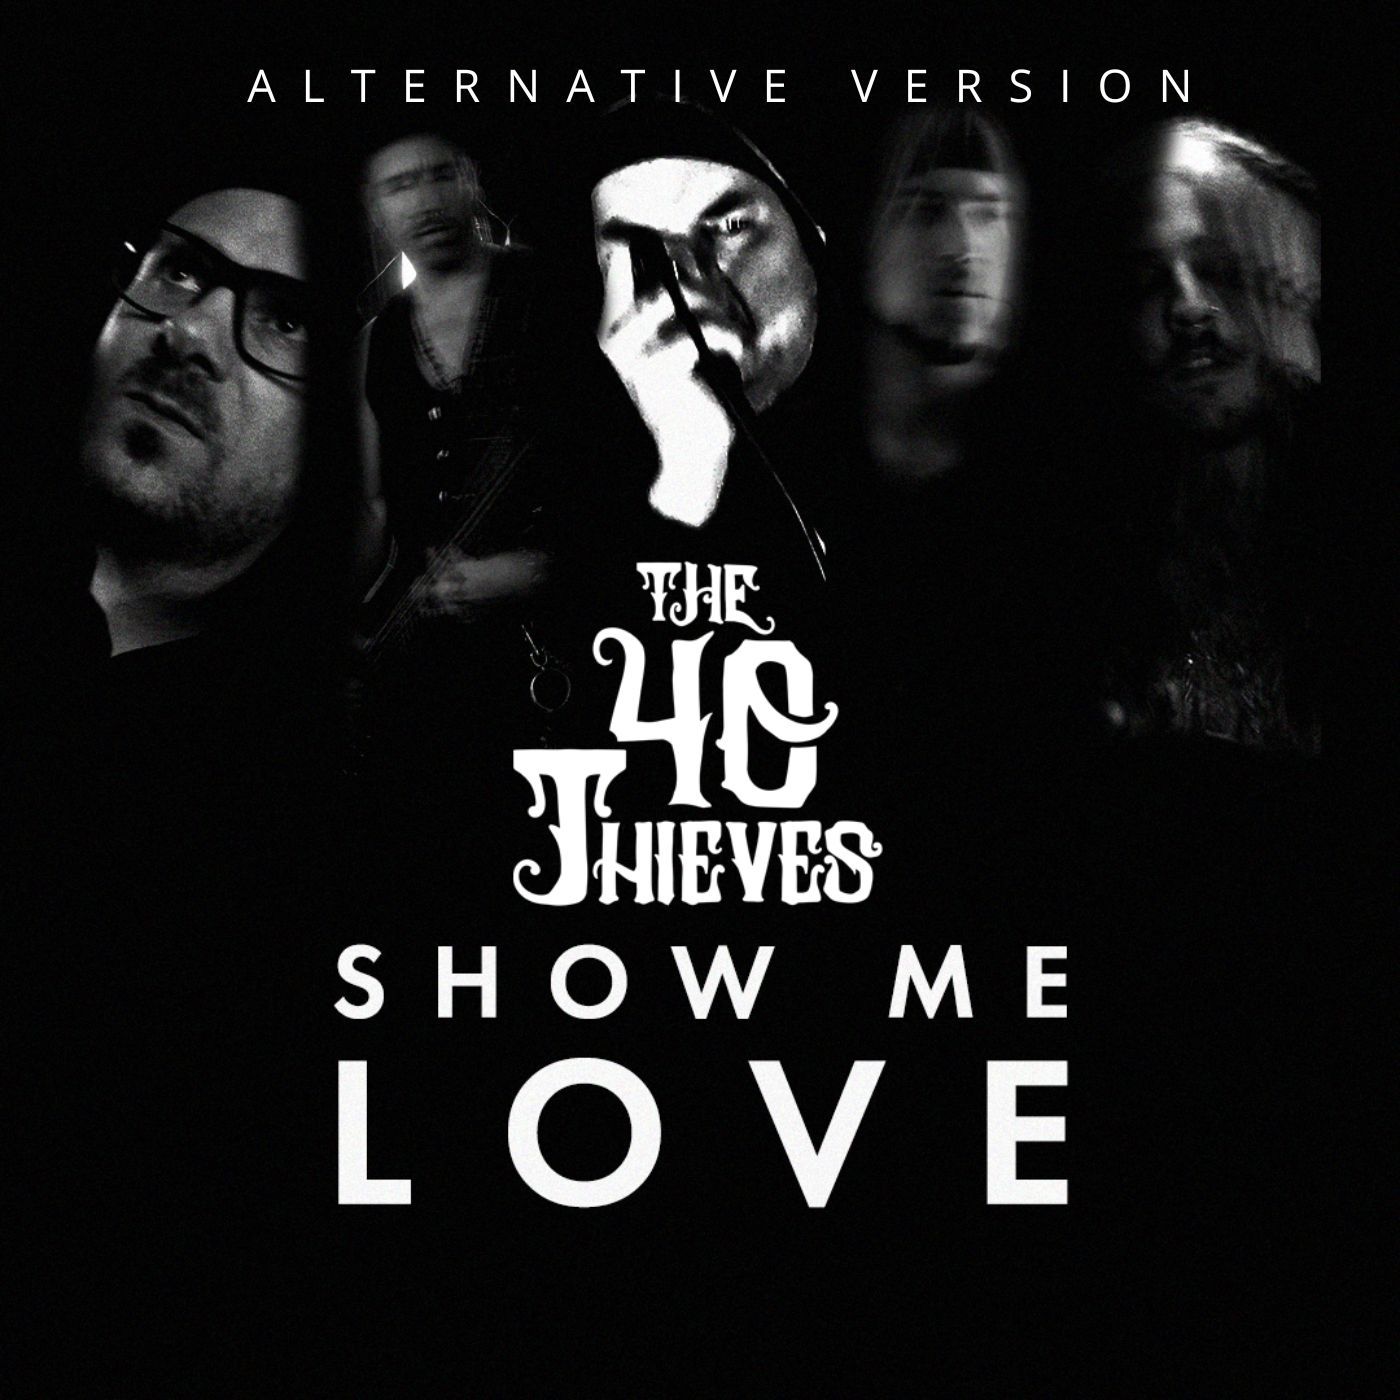 SHOW_ME_LOVE_alternativeversion